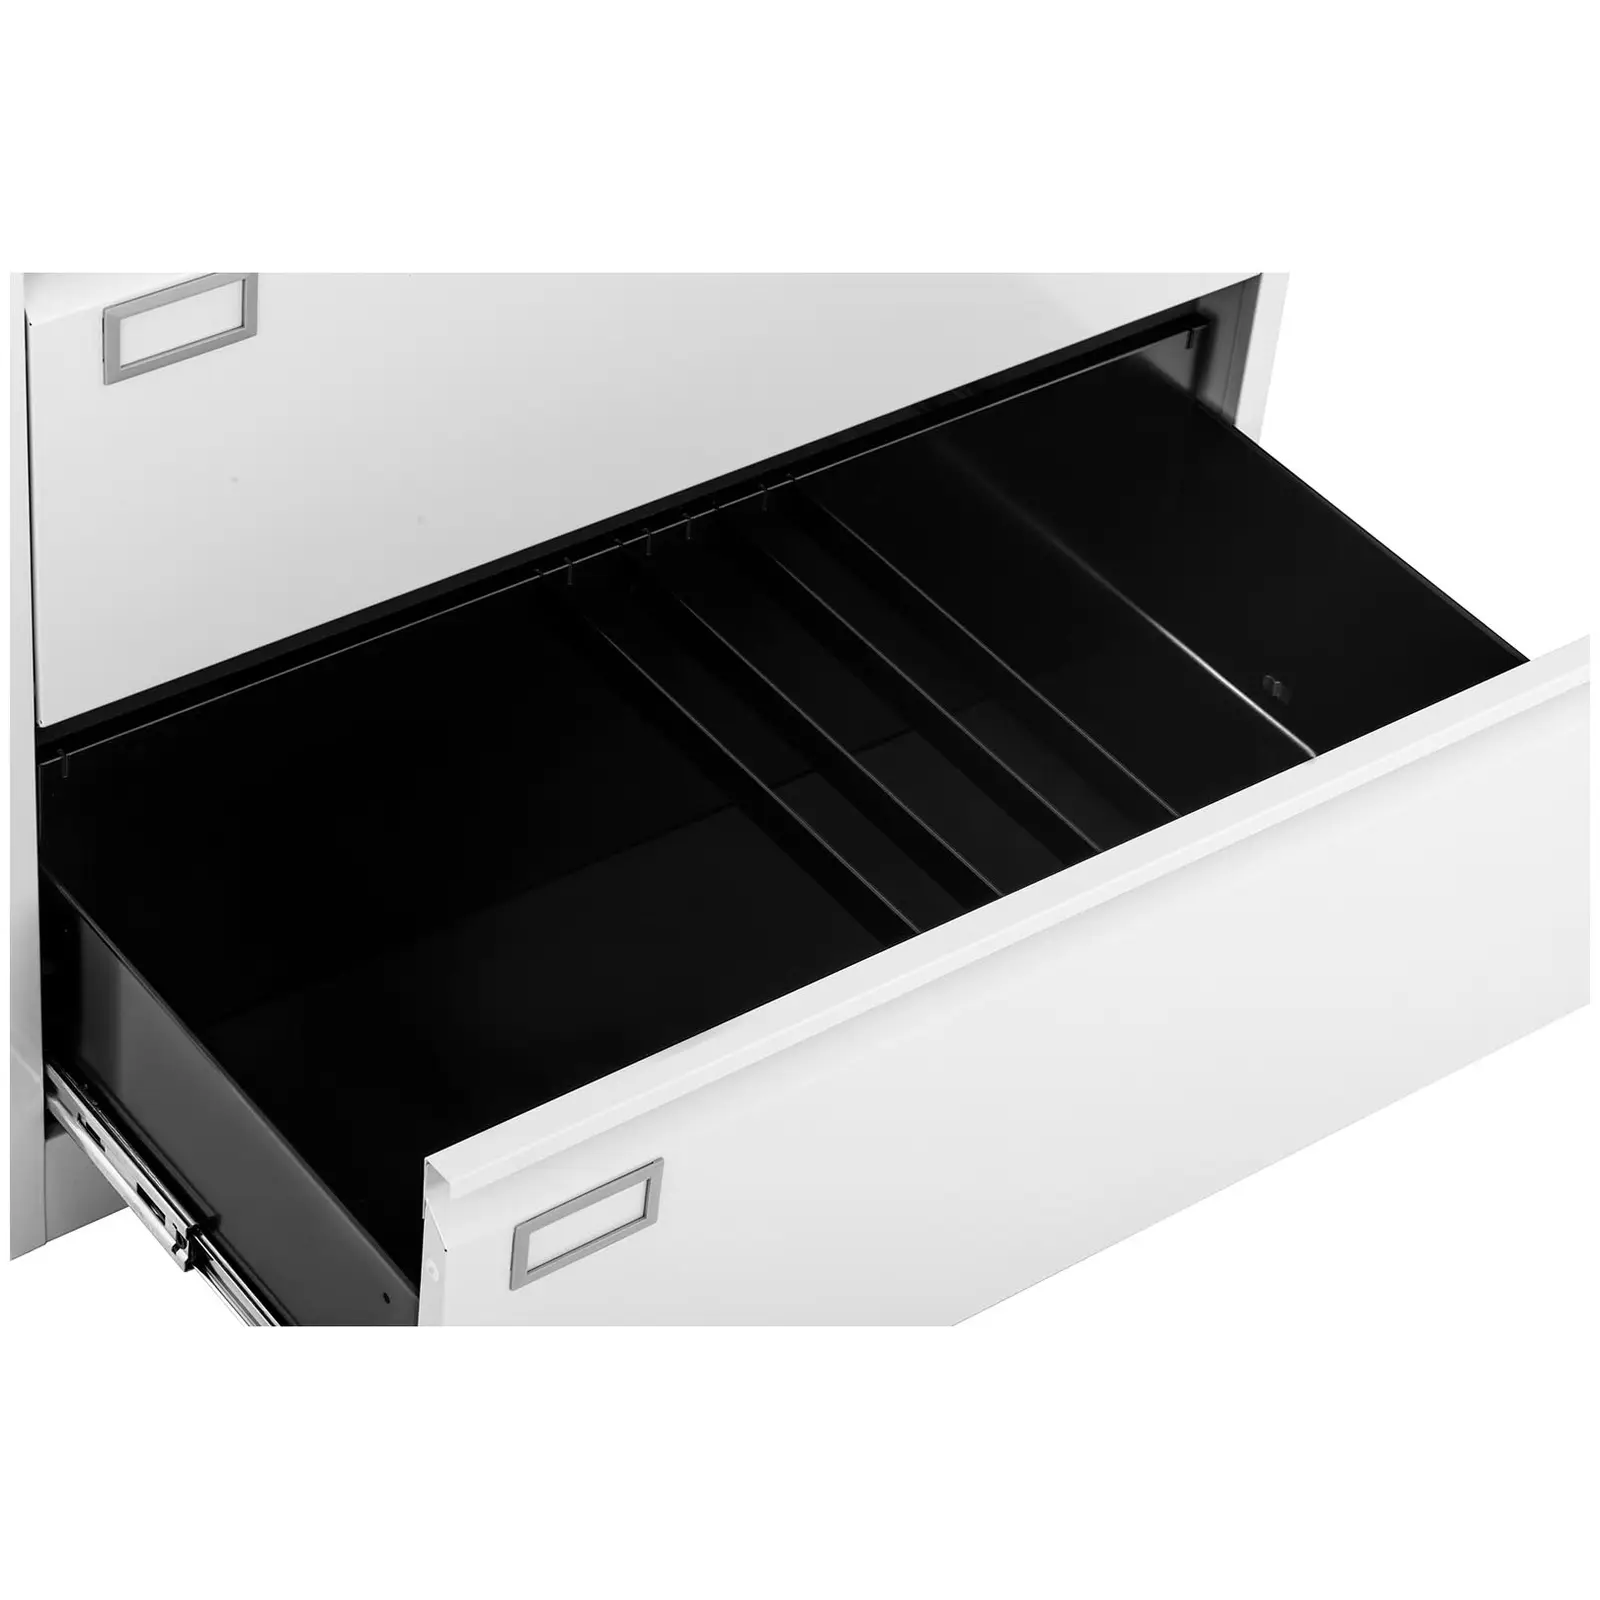 Metal Filing Cabinet - 132 cm - 4 drawers